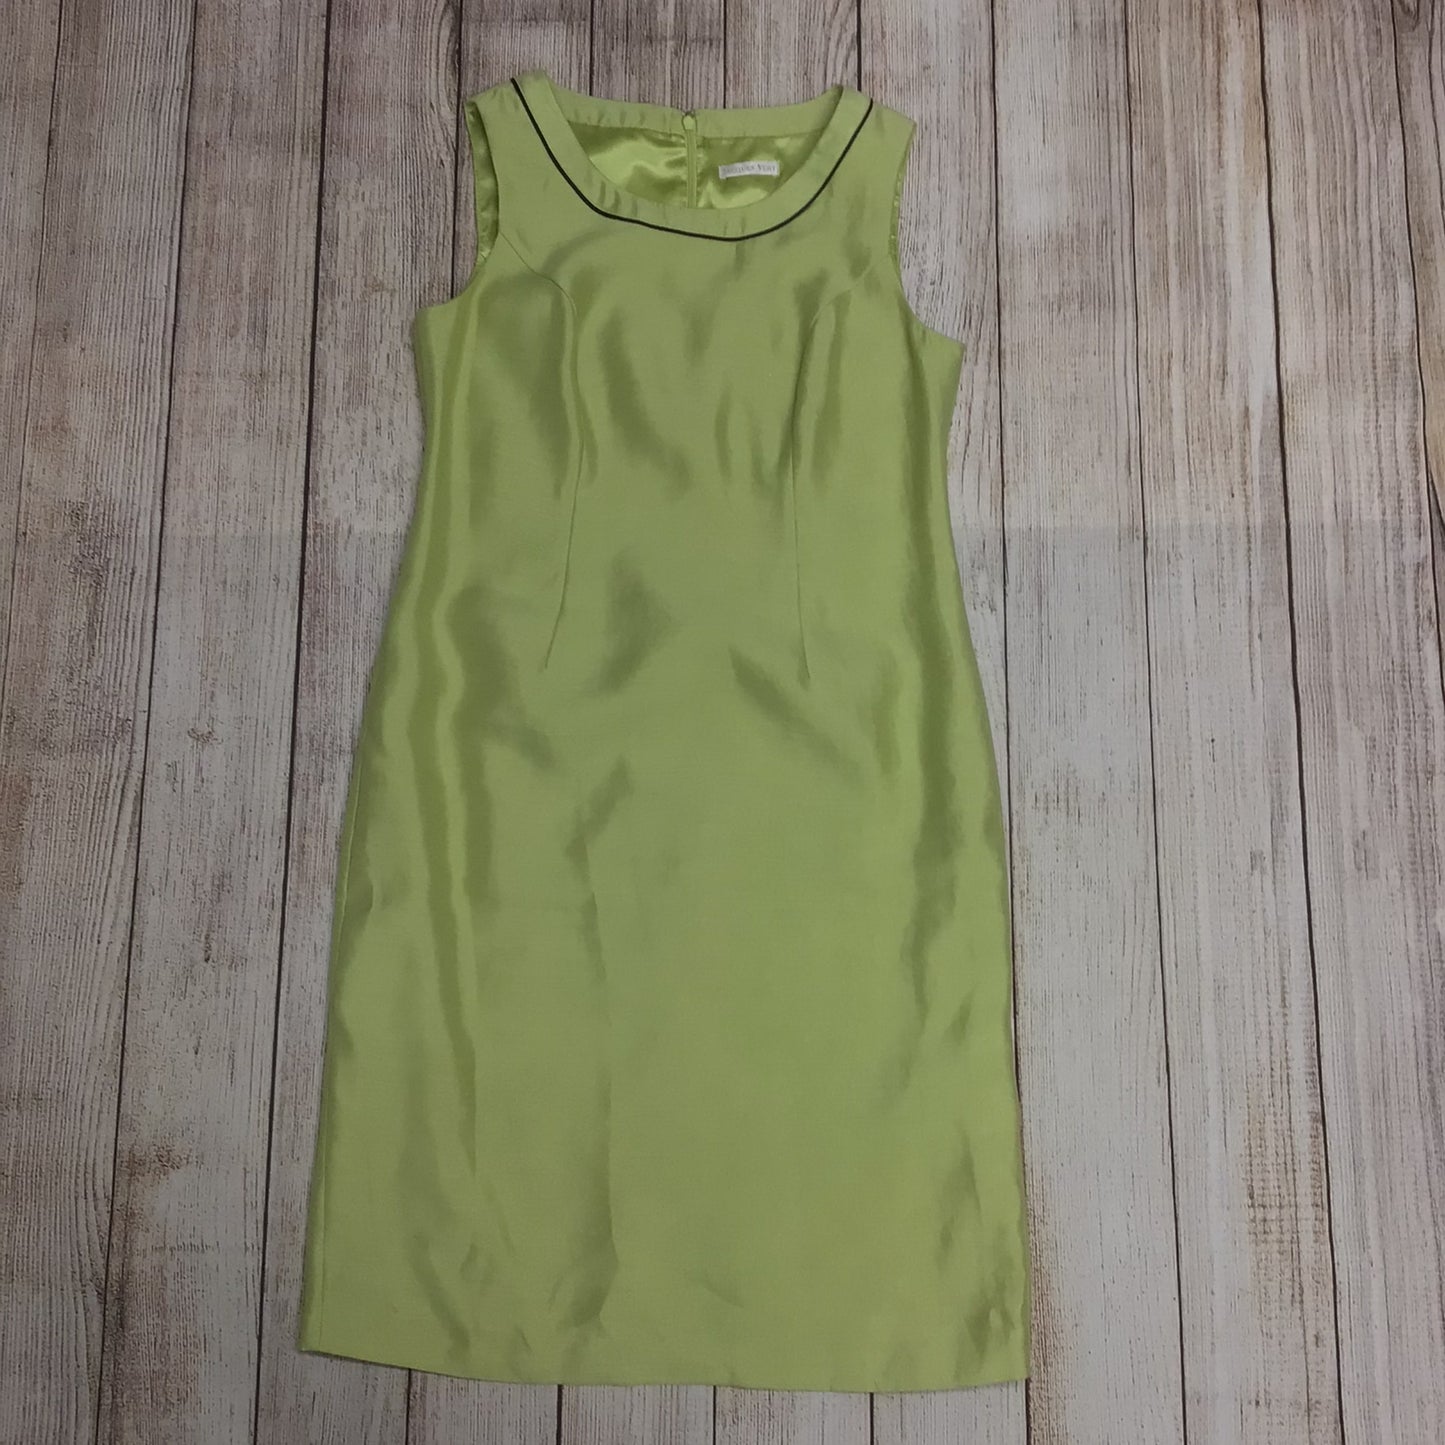 Jacques Vert Lime Green Dress Size 14